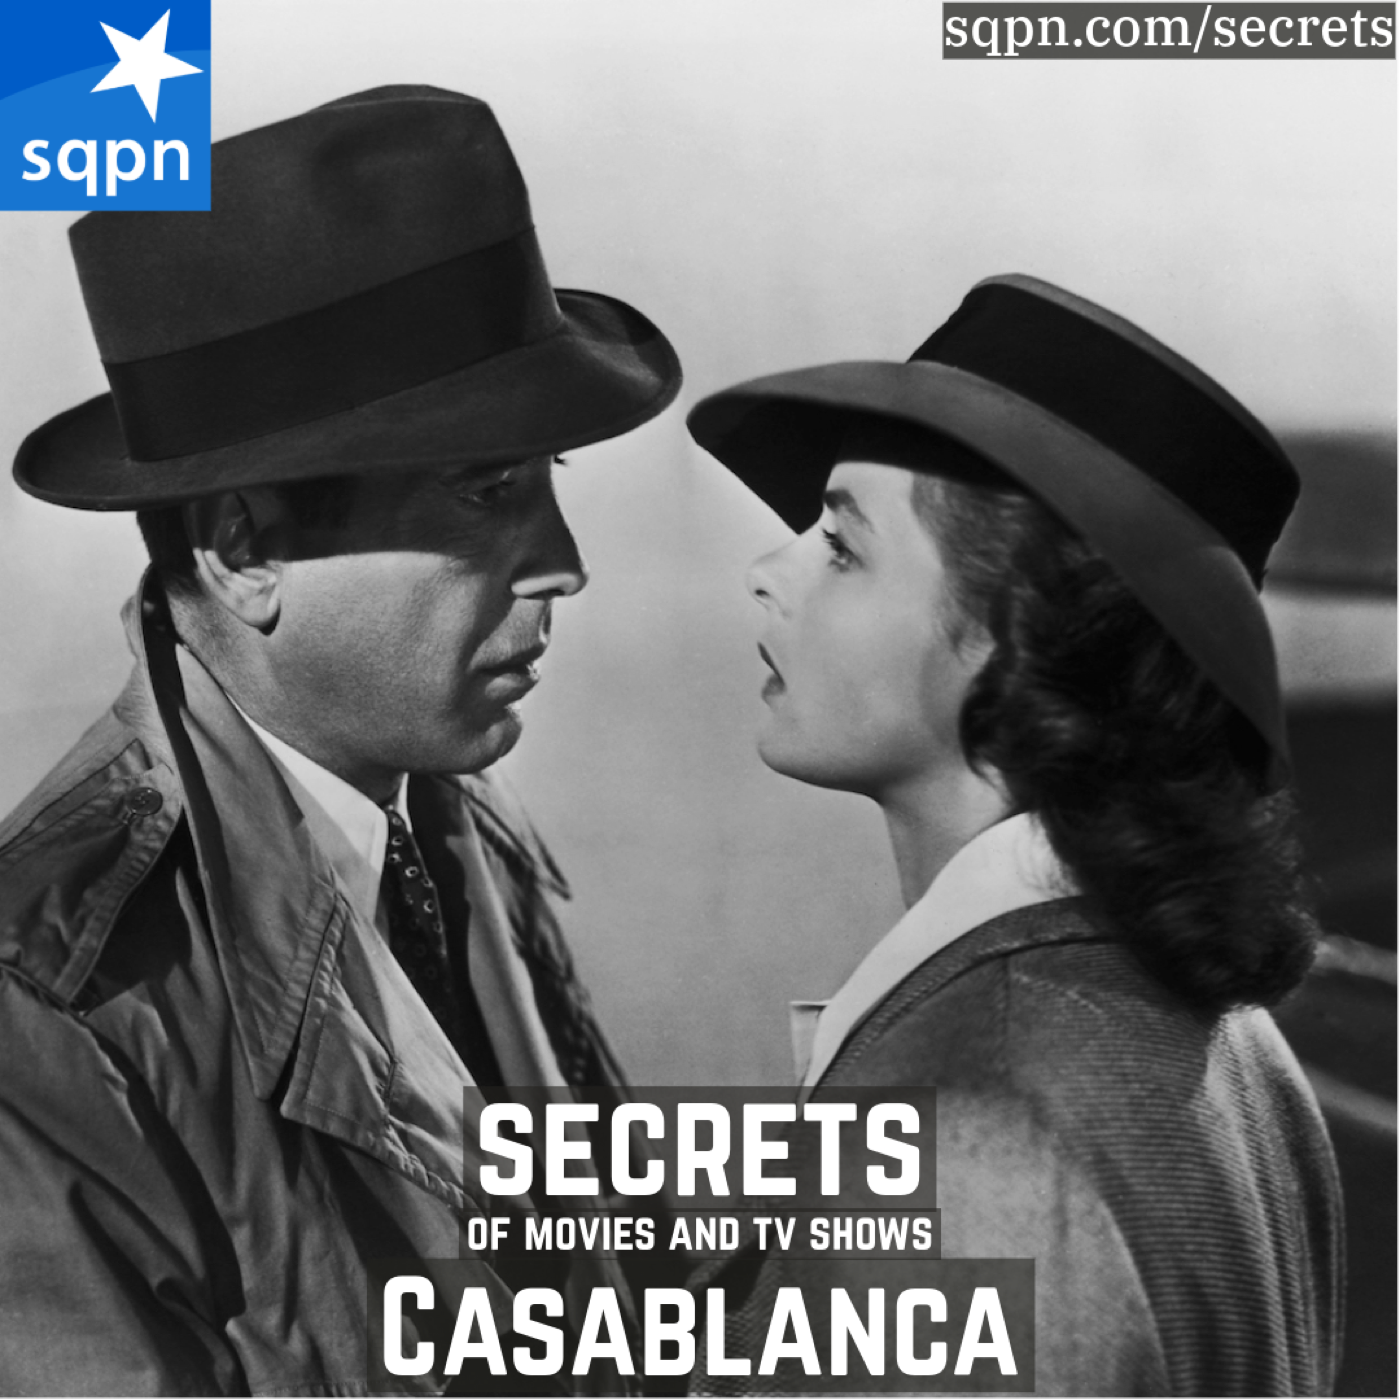 The Secrets of Casablanca